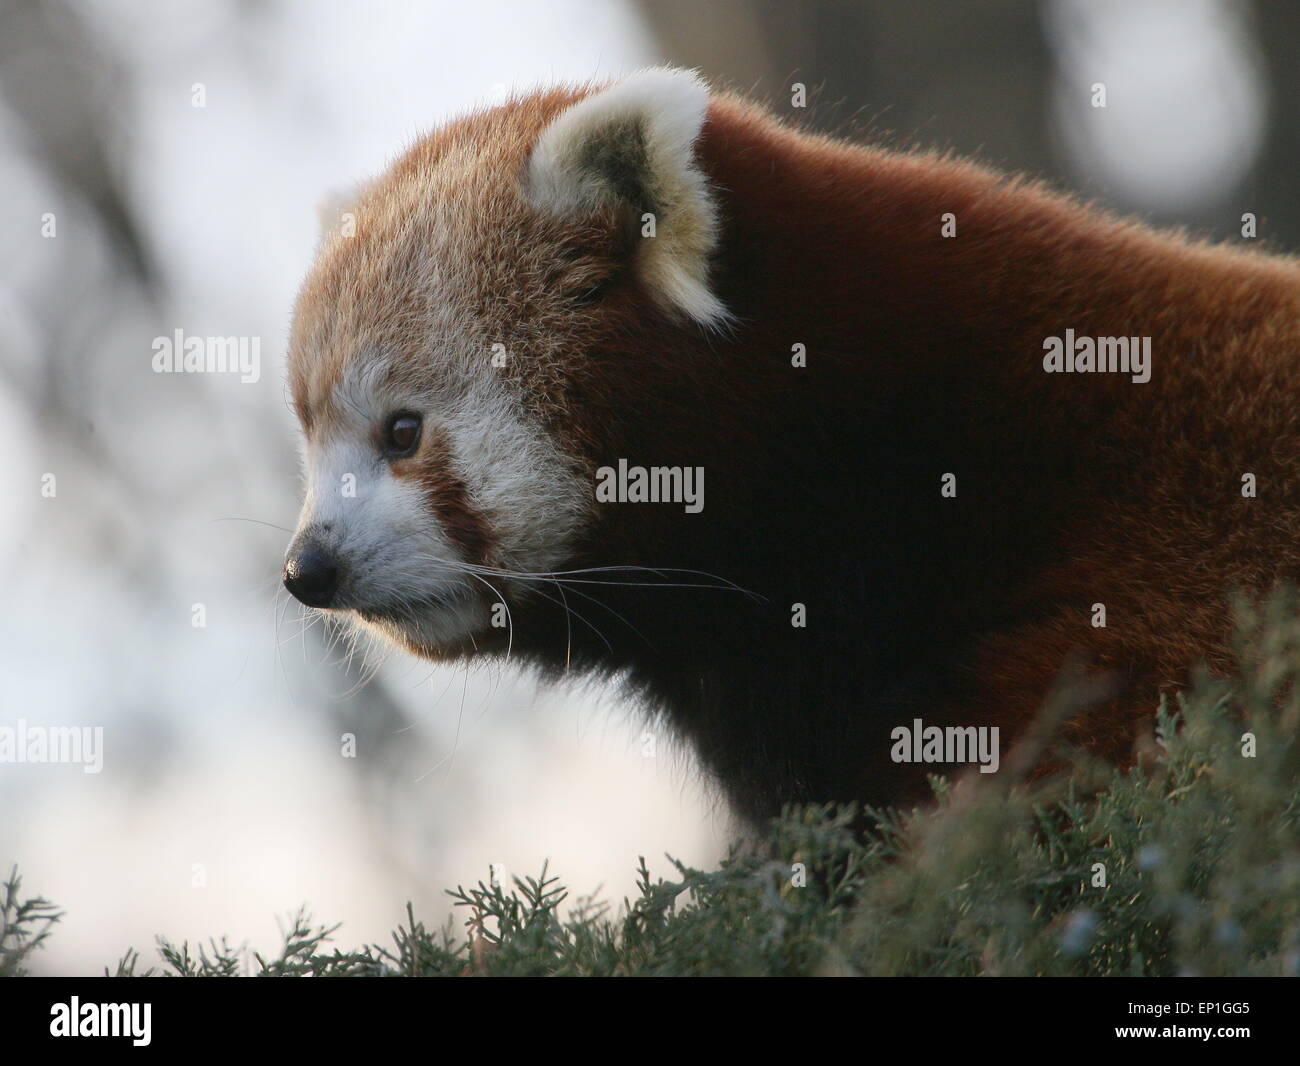 Asian Red Panda (Ailurus fulgens) in a tree, seen in profile Stock Photo